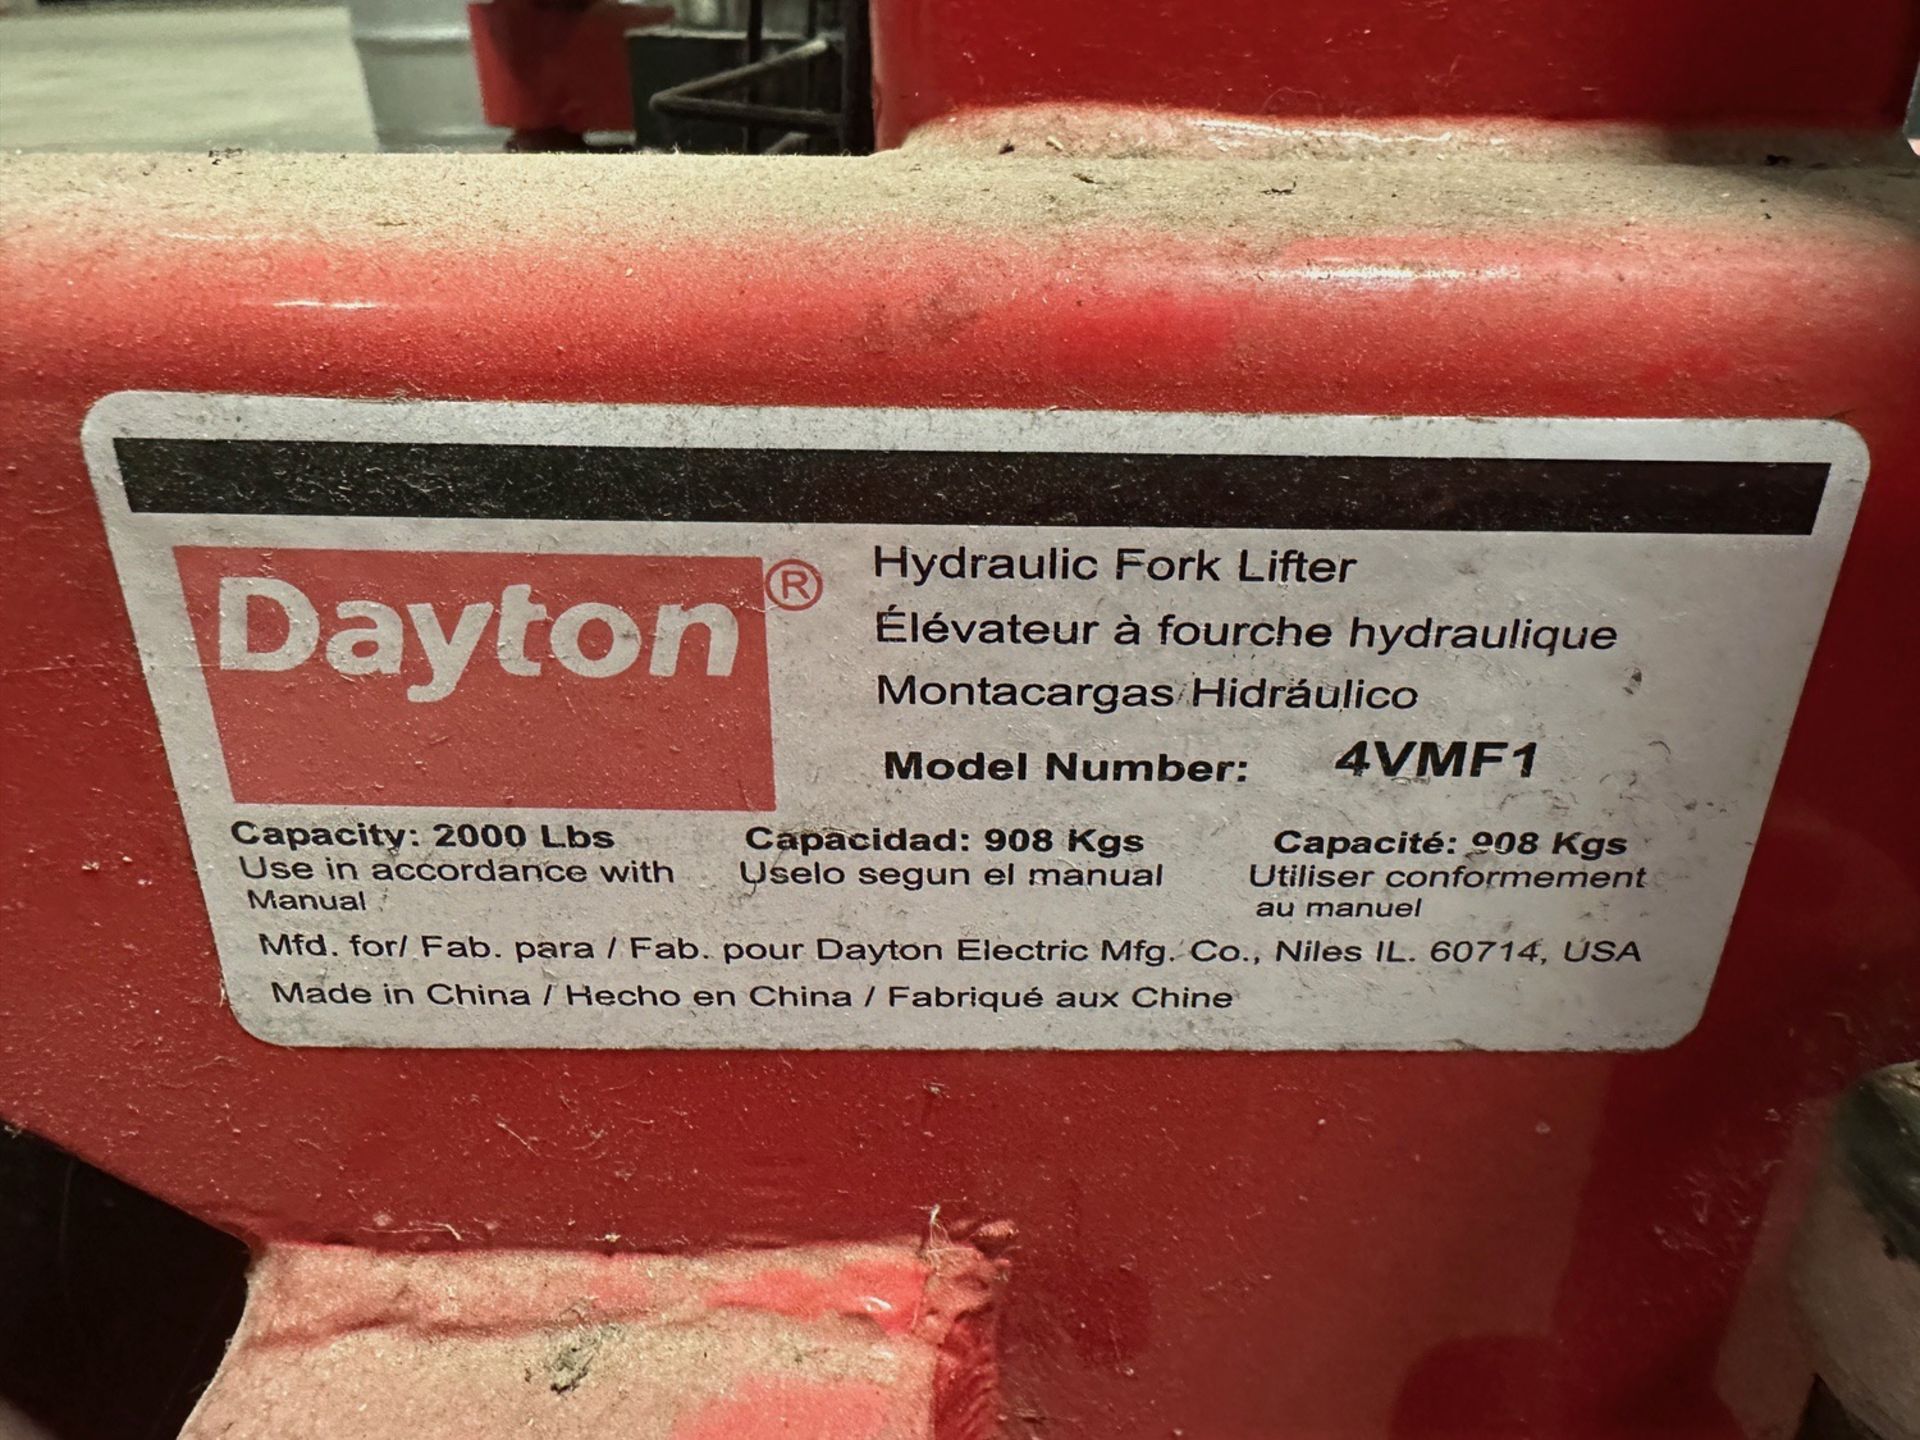 Dayton Manual Lift with 2000 LB Capacity - Model 4VMF1 | Rig Fee $25 - Image 4 of 4